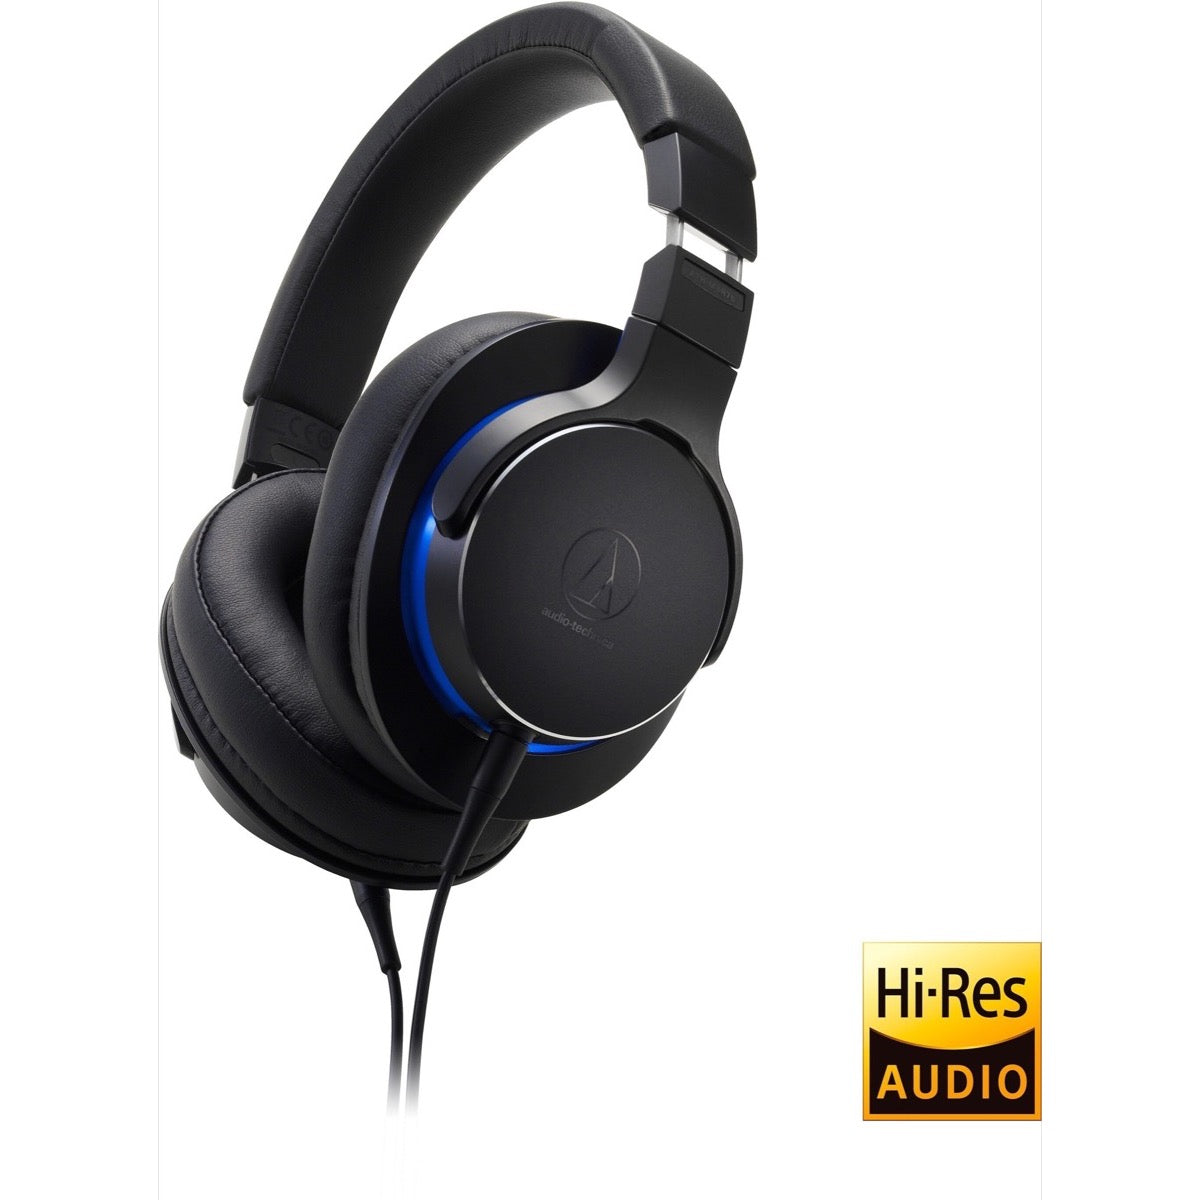 Audio-Technica ATH-MSR7b Over-Ear High-Resolution Headphones, Black